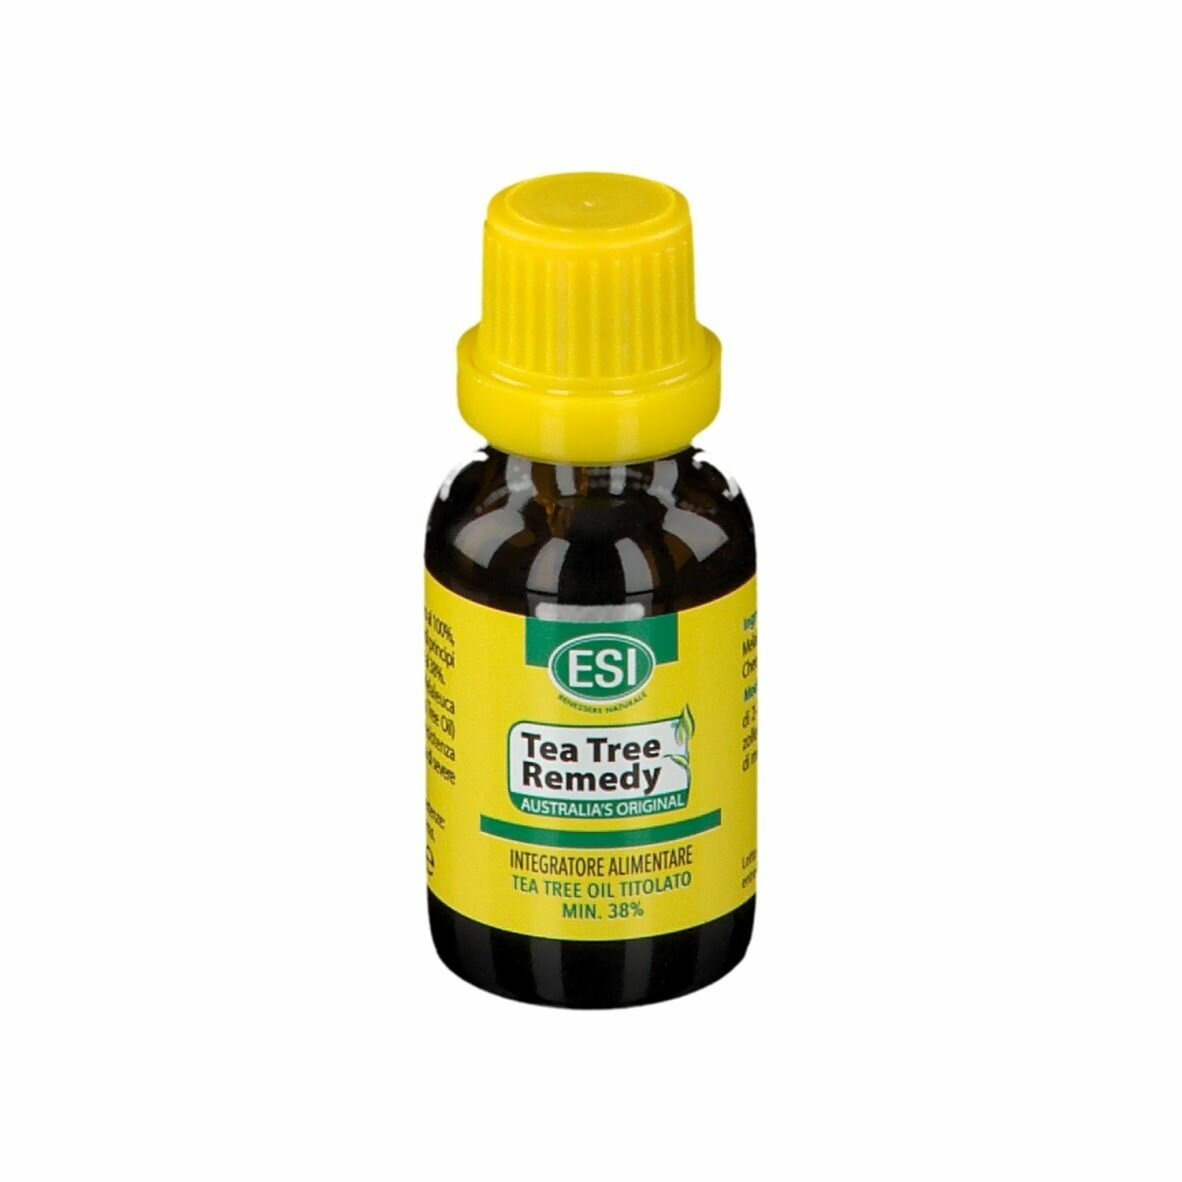 Tea tree remedy oil esi 25 ml img